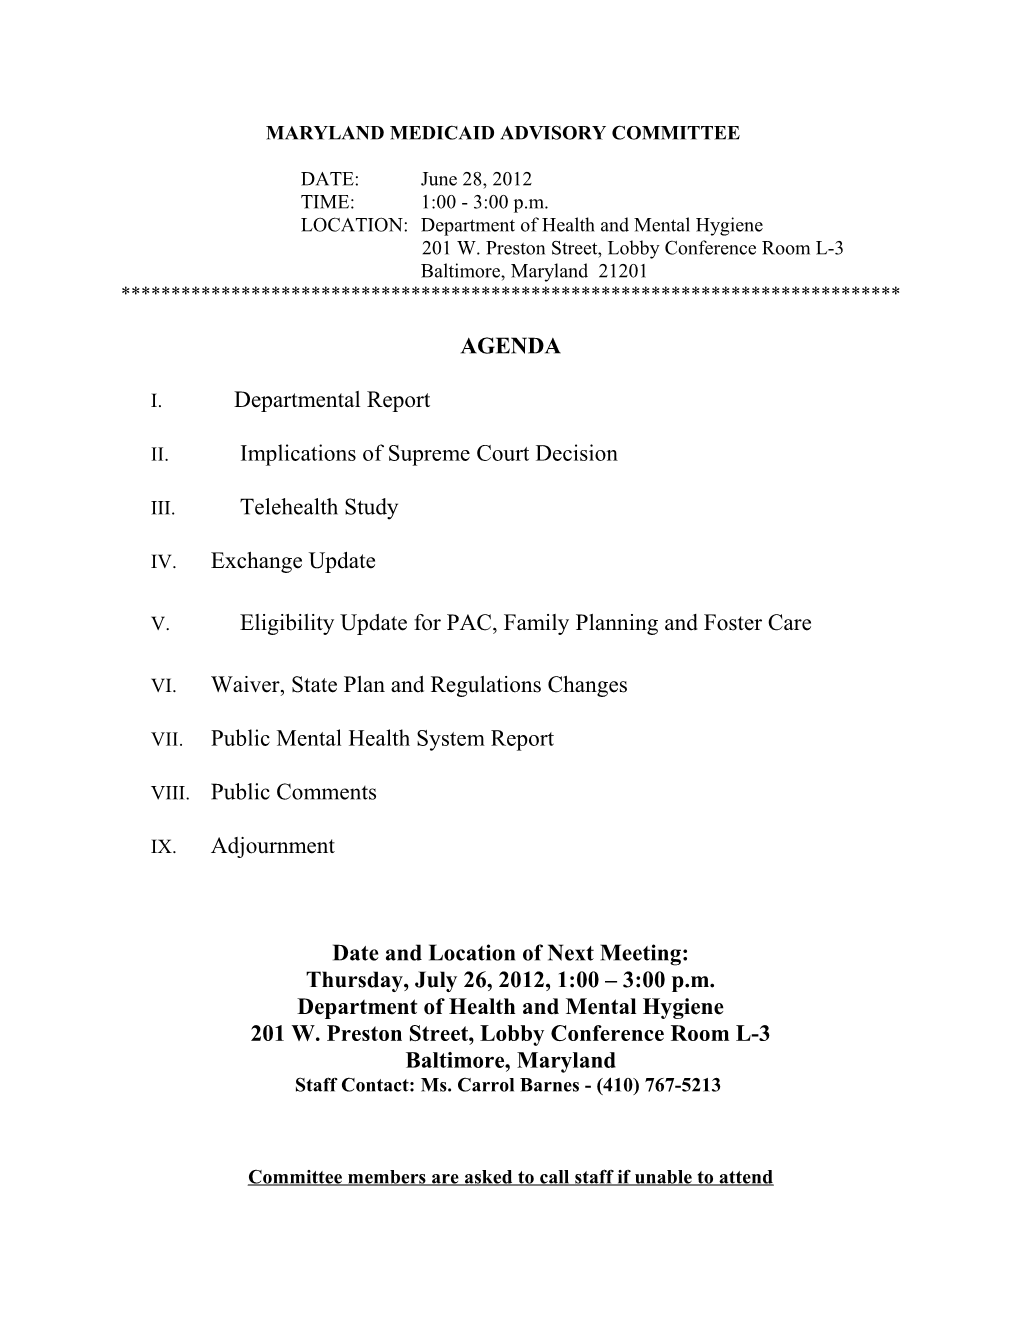 Maryland Medicaid Advisory Committee s4